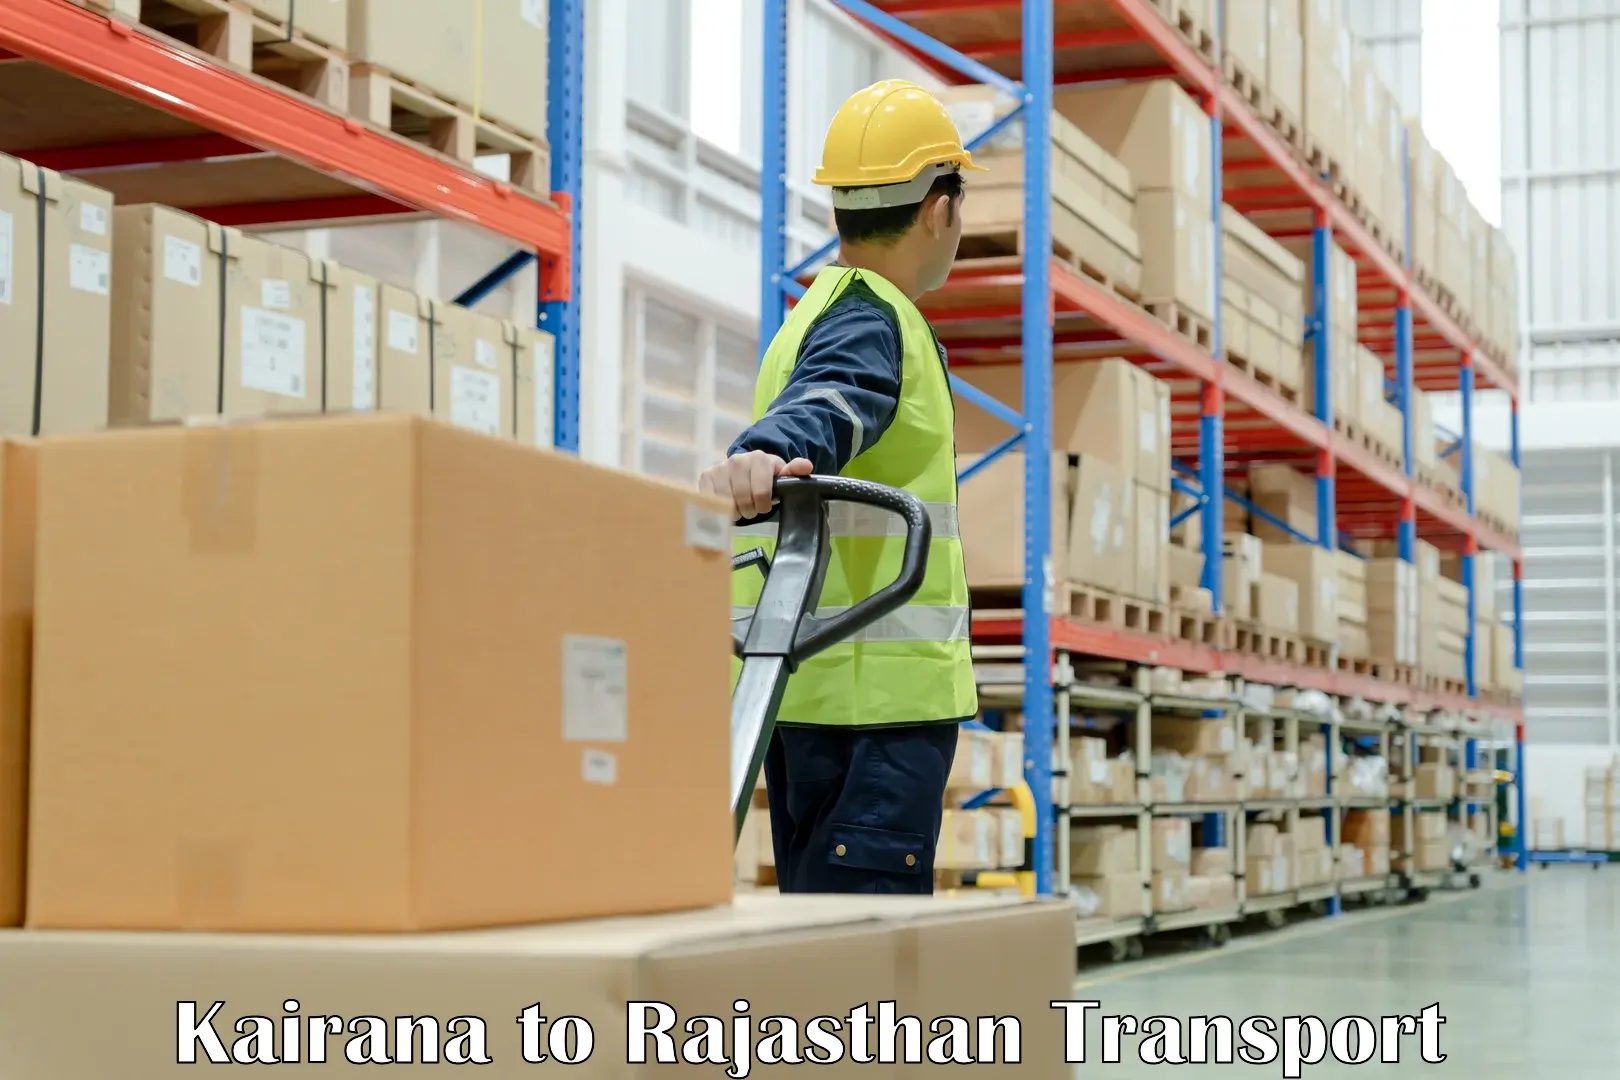 Truck transport companies in India Kairana to Chaumahla